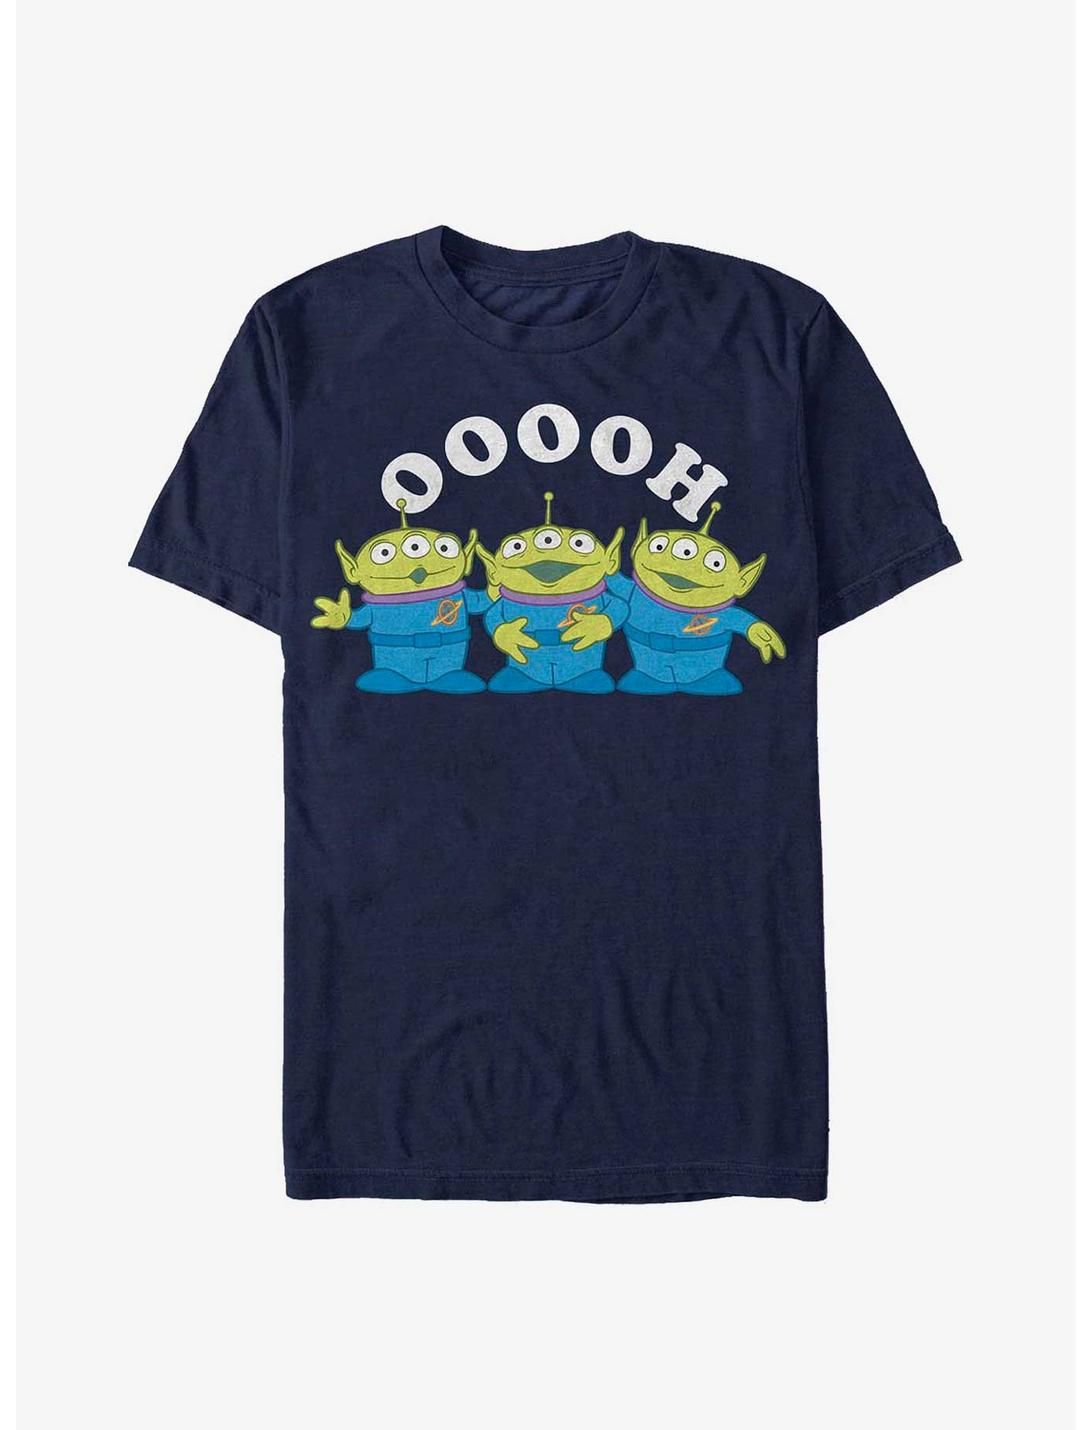 Plus Size Disney Pixar Toy Story Ooooh Yeah T-Shirt, NAVY, hi-res